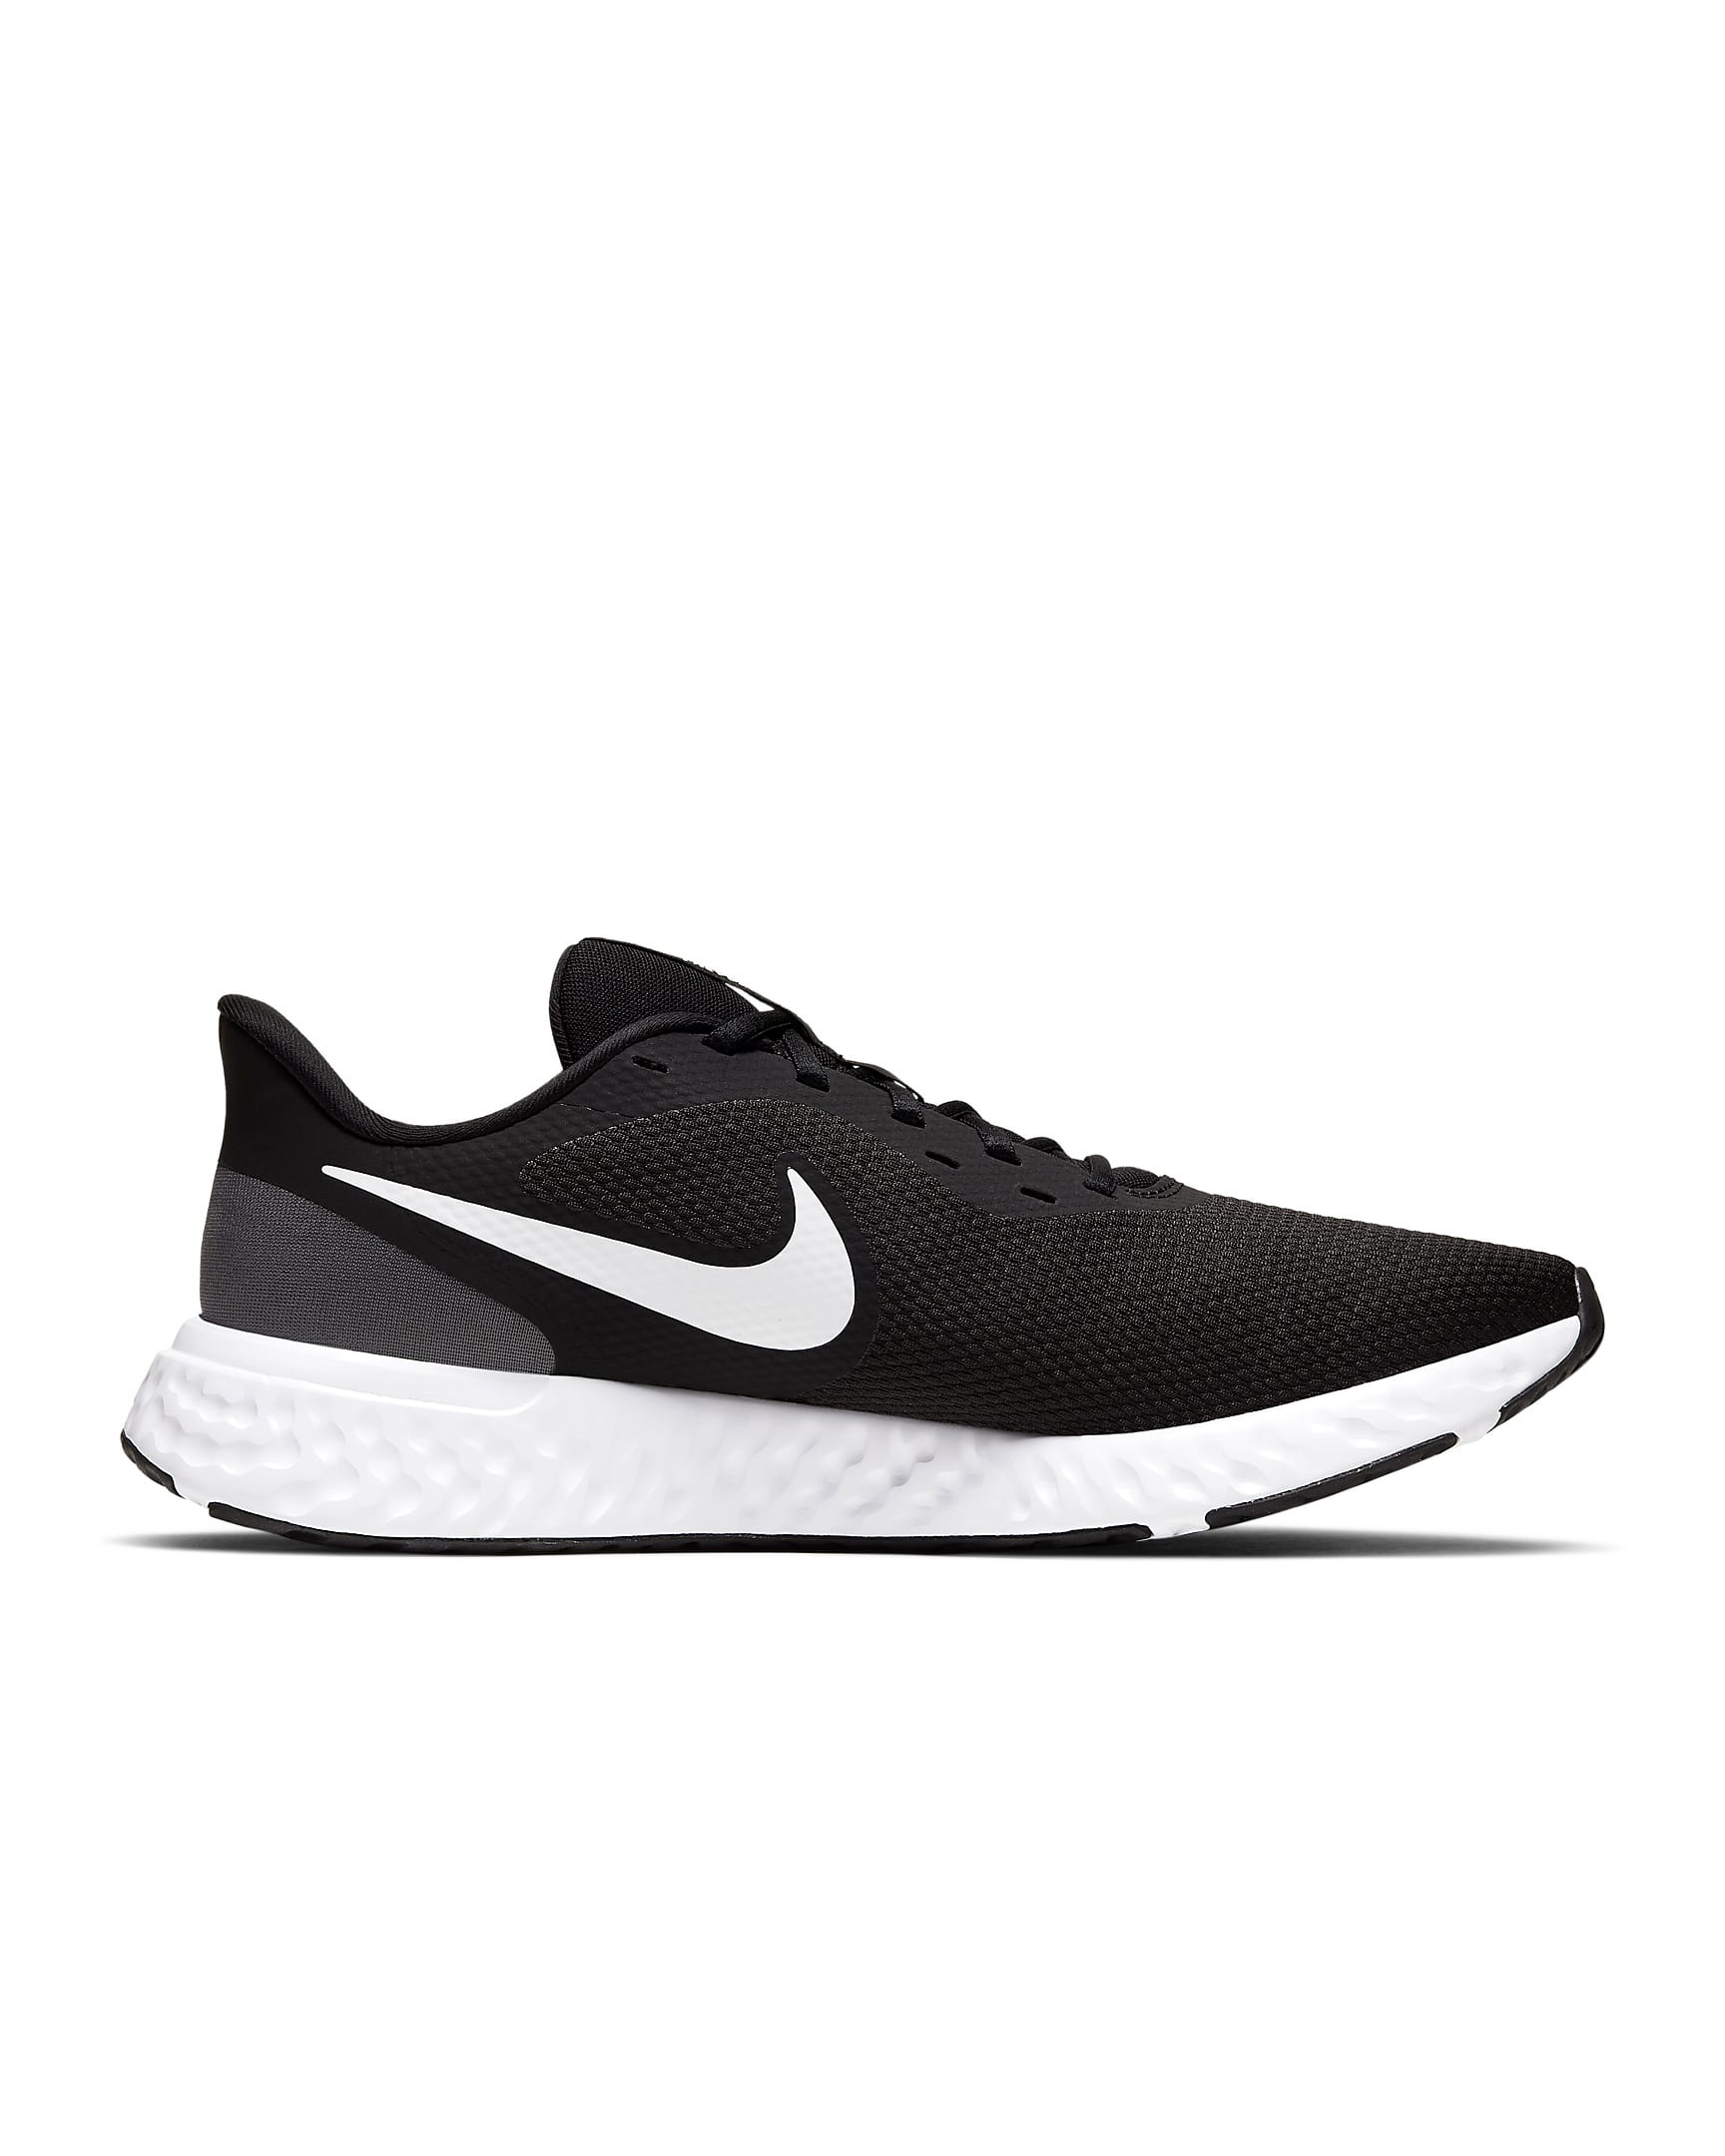 Men's Nike Revolution 5 Black/White-Anthracite (BQ3204 002) - 10.5 - image 2 of 7